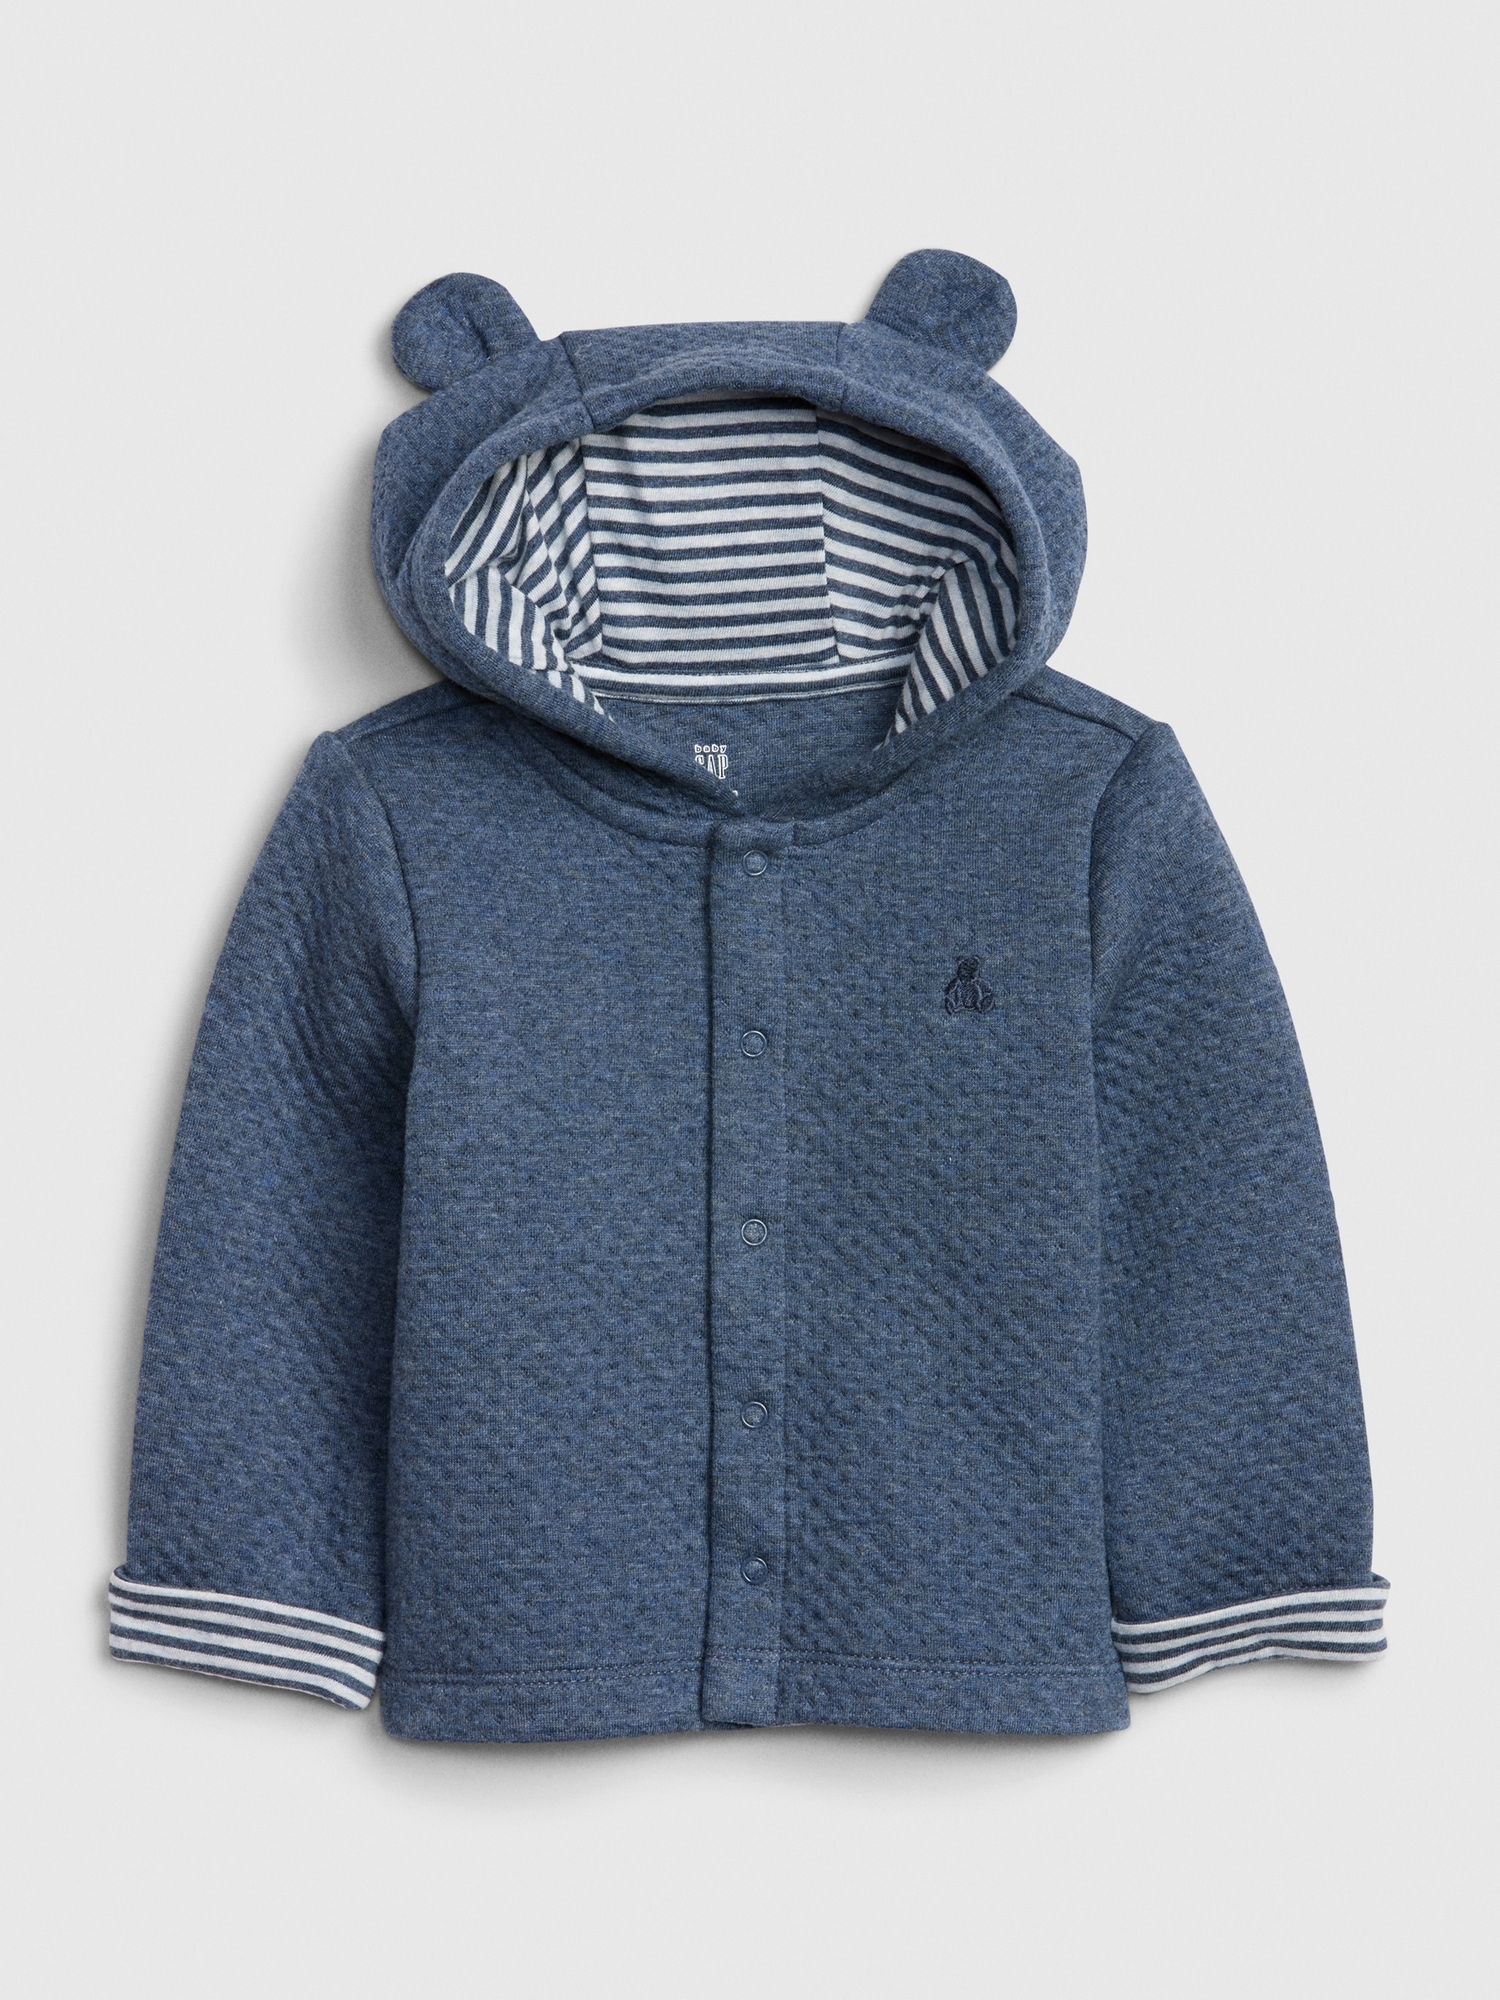 GAP - Brannan Bear Kids Sweater